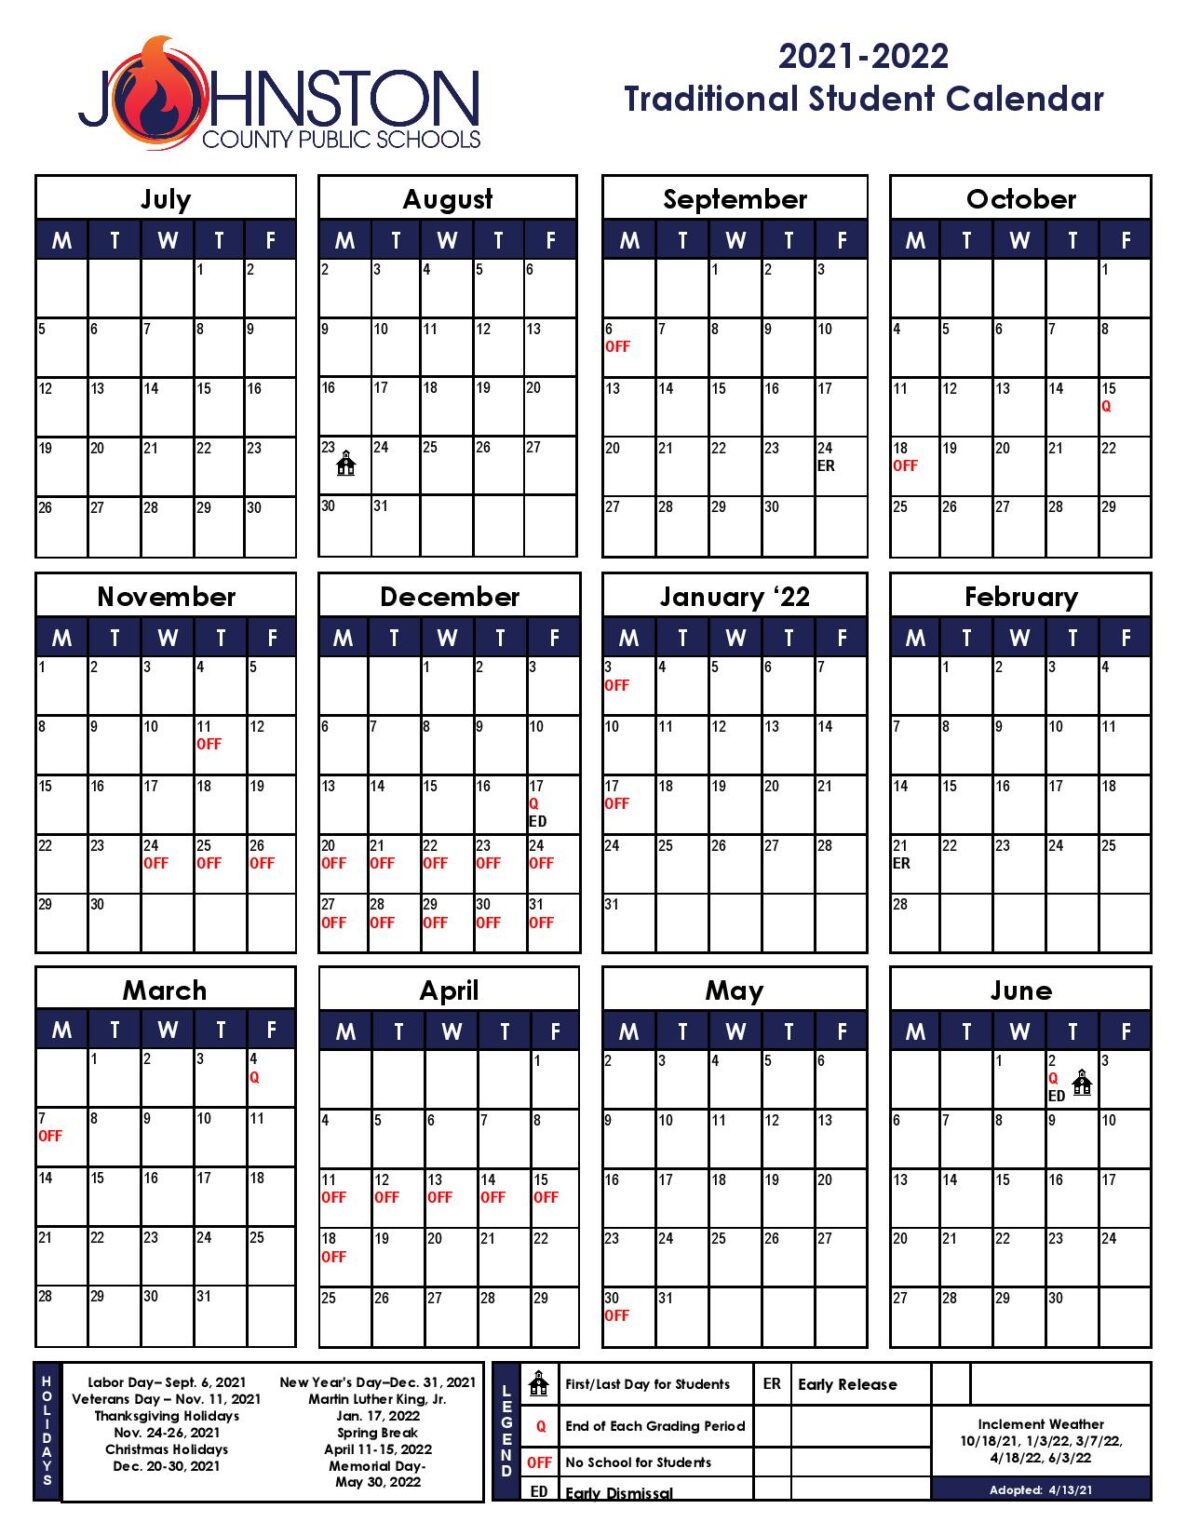 Johnston County Schools Calendar 20212022 in PDF